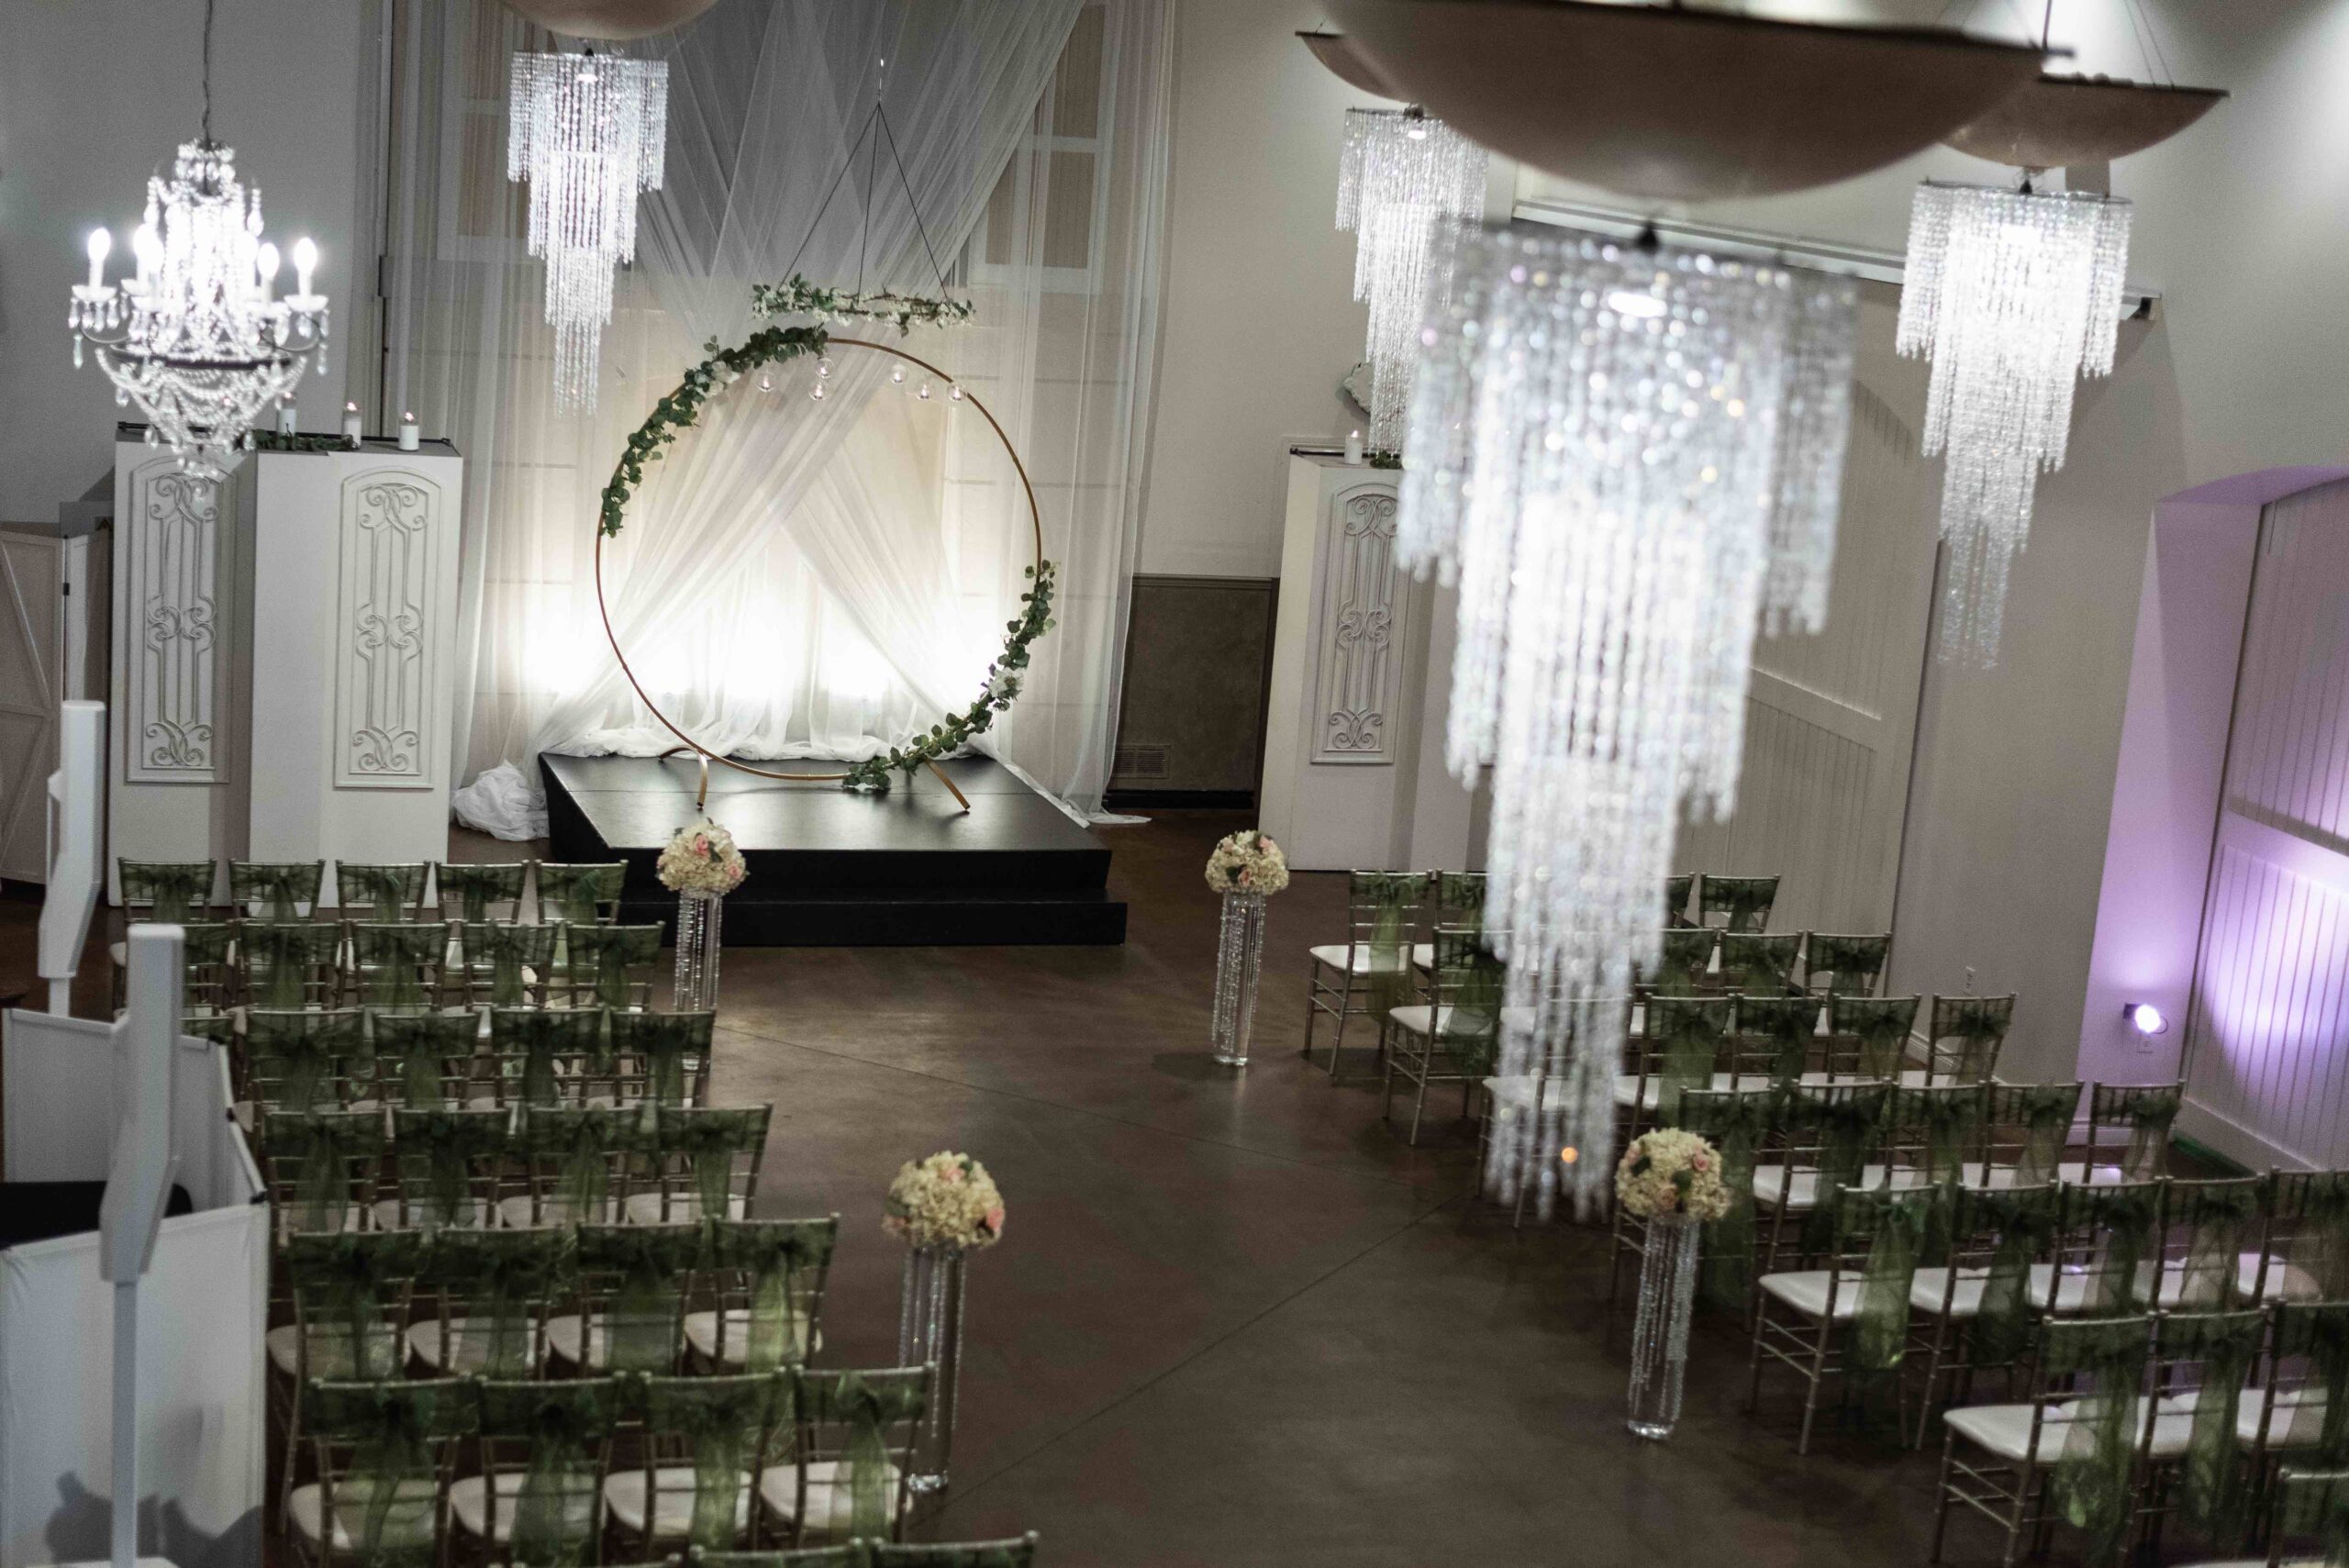 Denver Wedding Ceremony inside with chandeliers